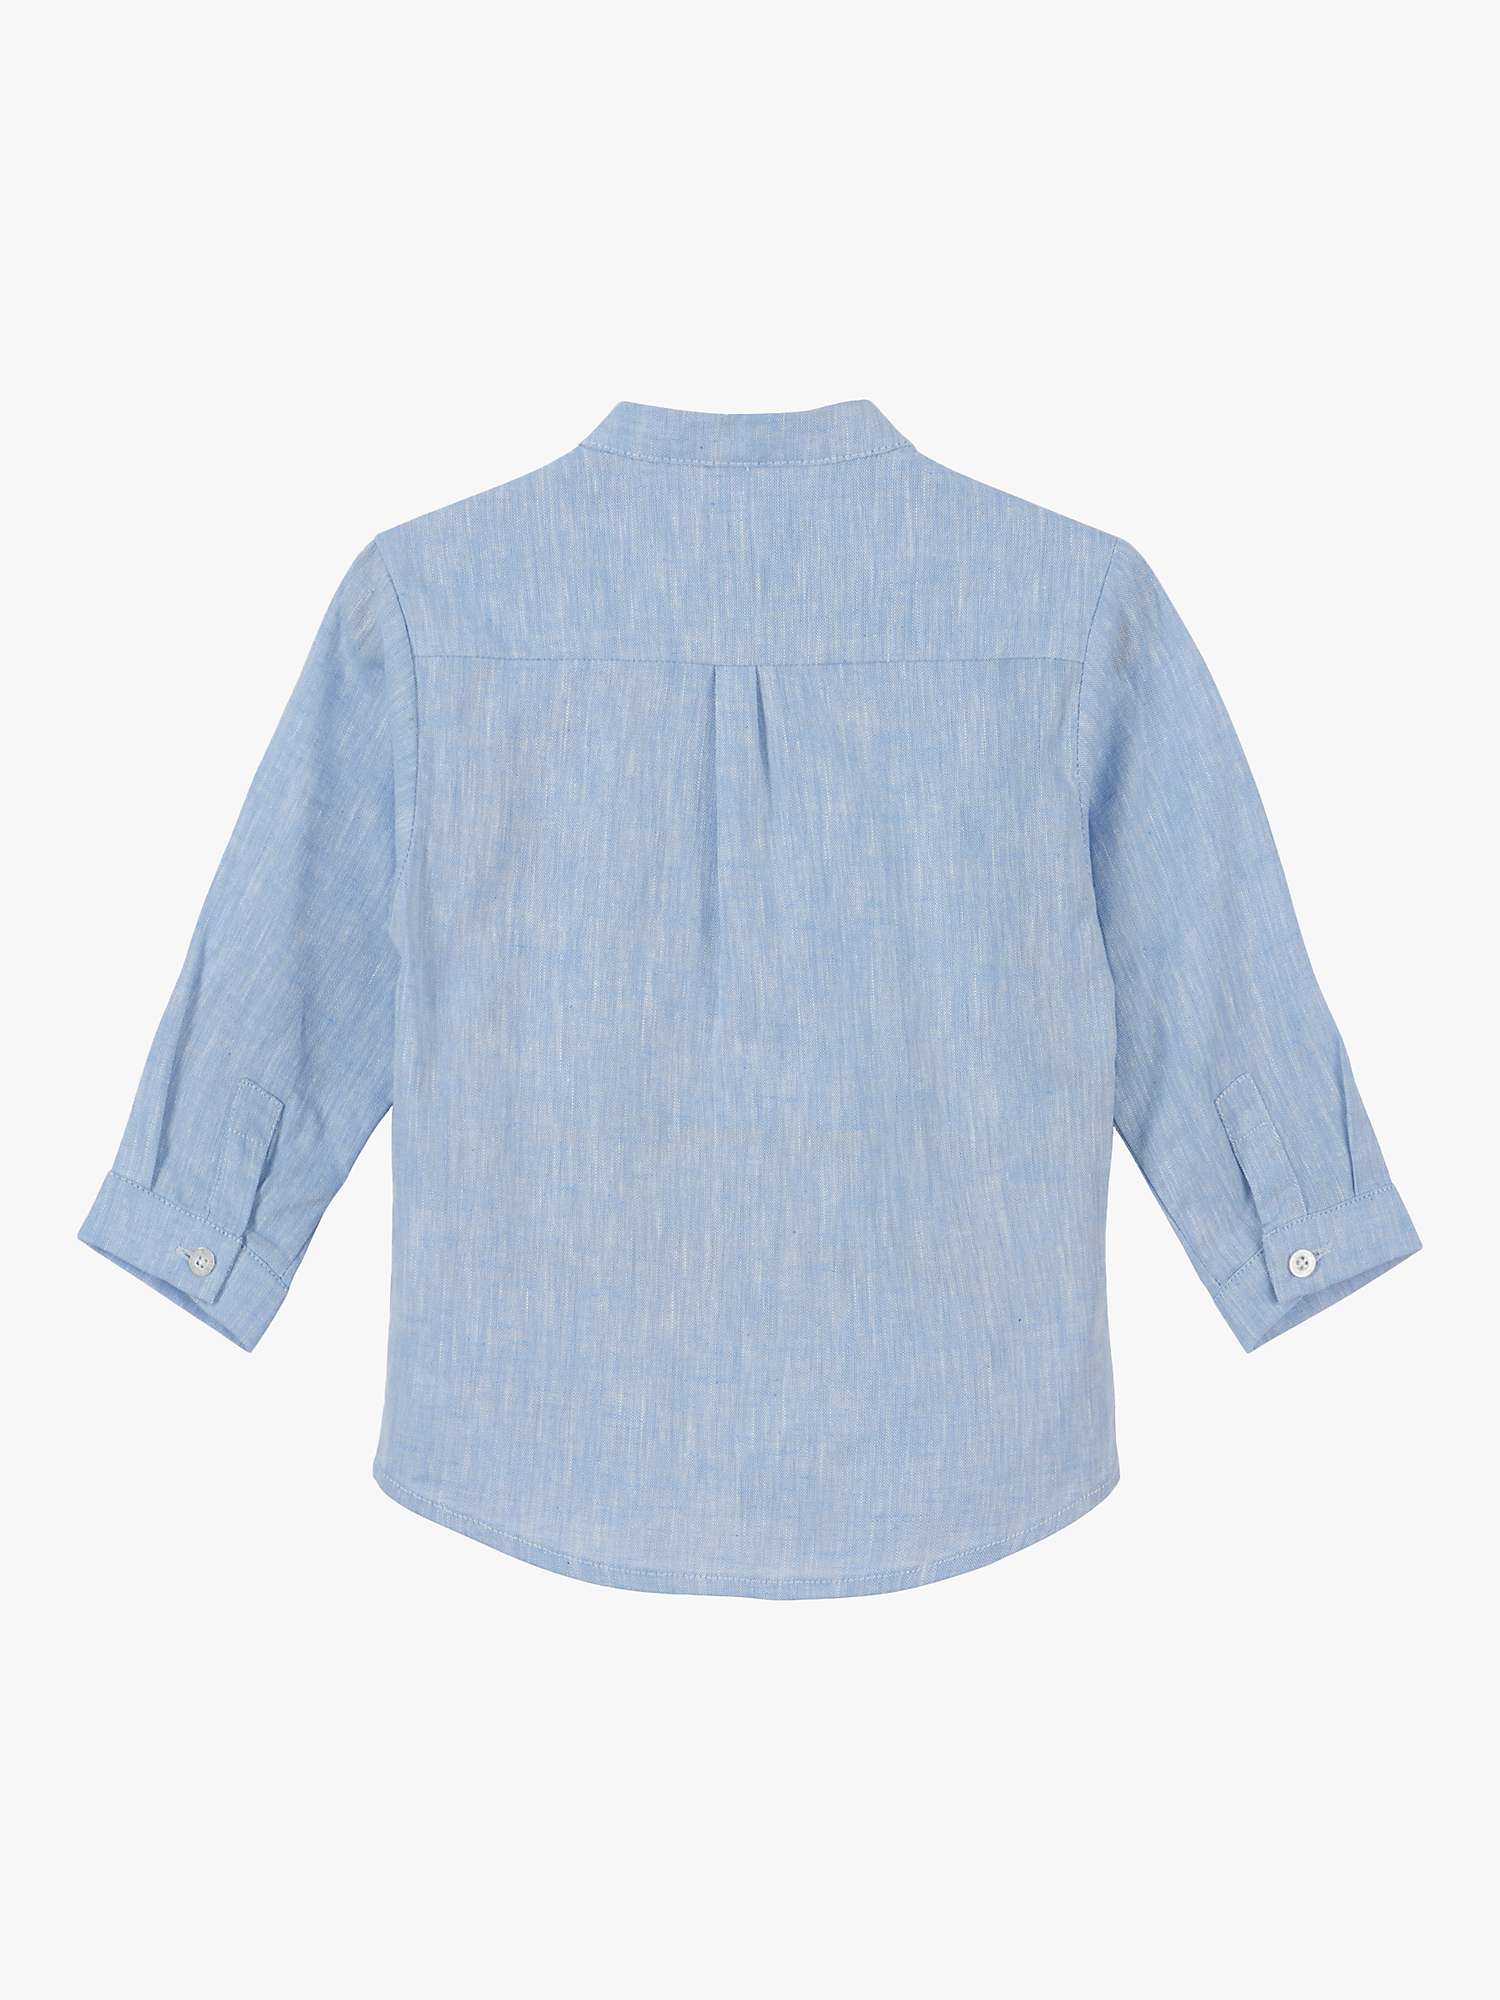 Buy Trotters Baby Oscar Cotton Shirt, Pale Blue Online at johnlewis.com